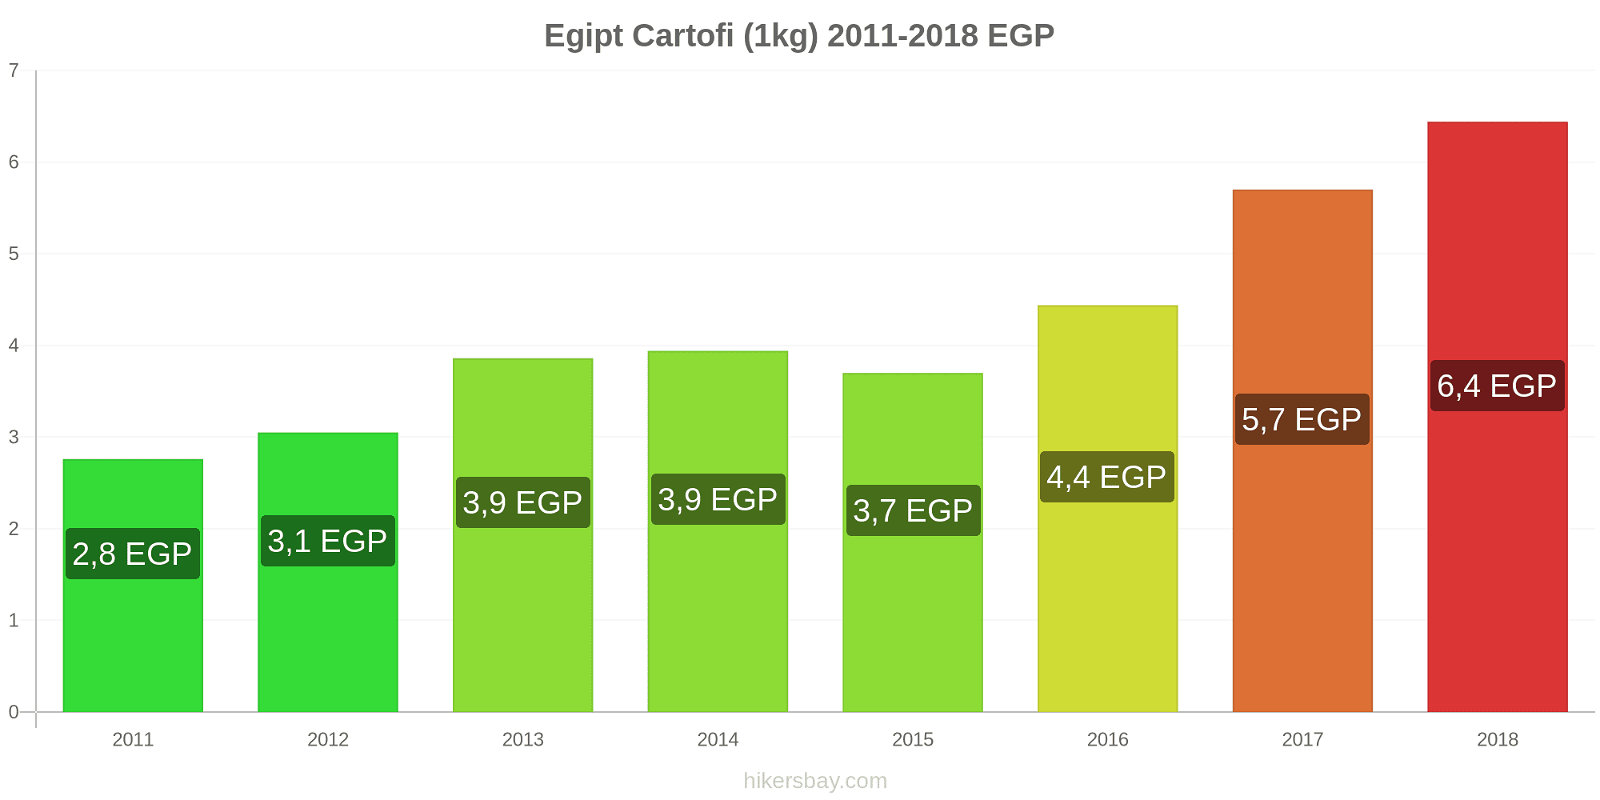 Egipt schimbări de prețuri Cartofi (1kg) hikersbay.com